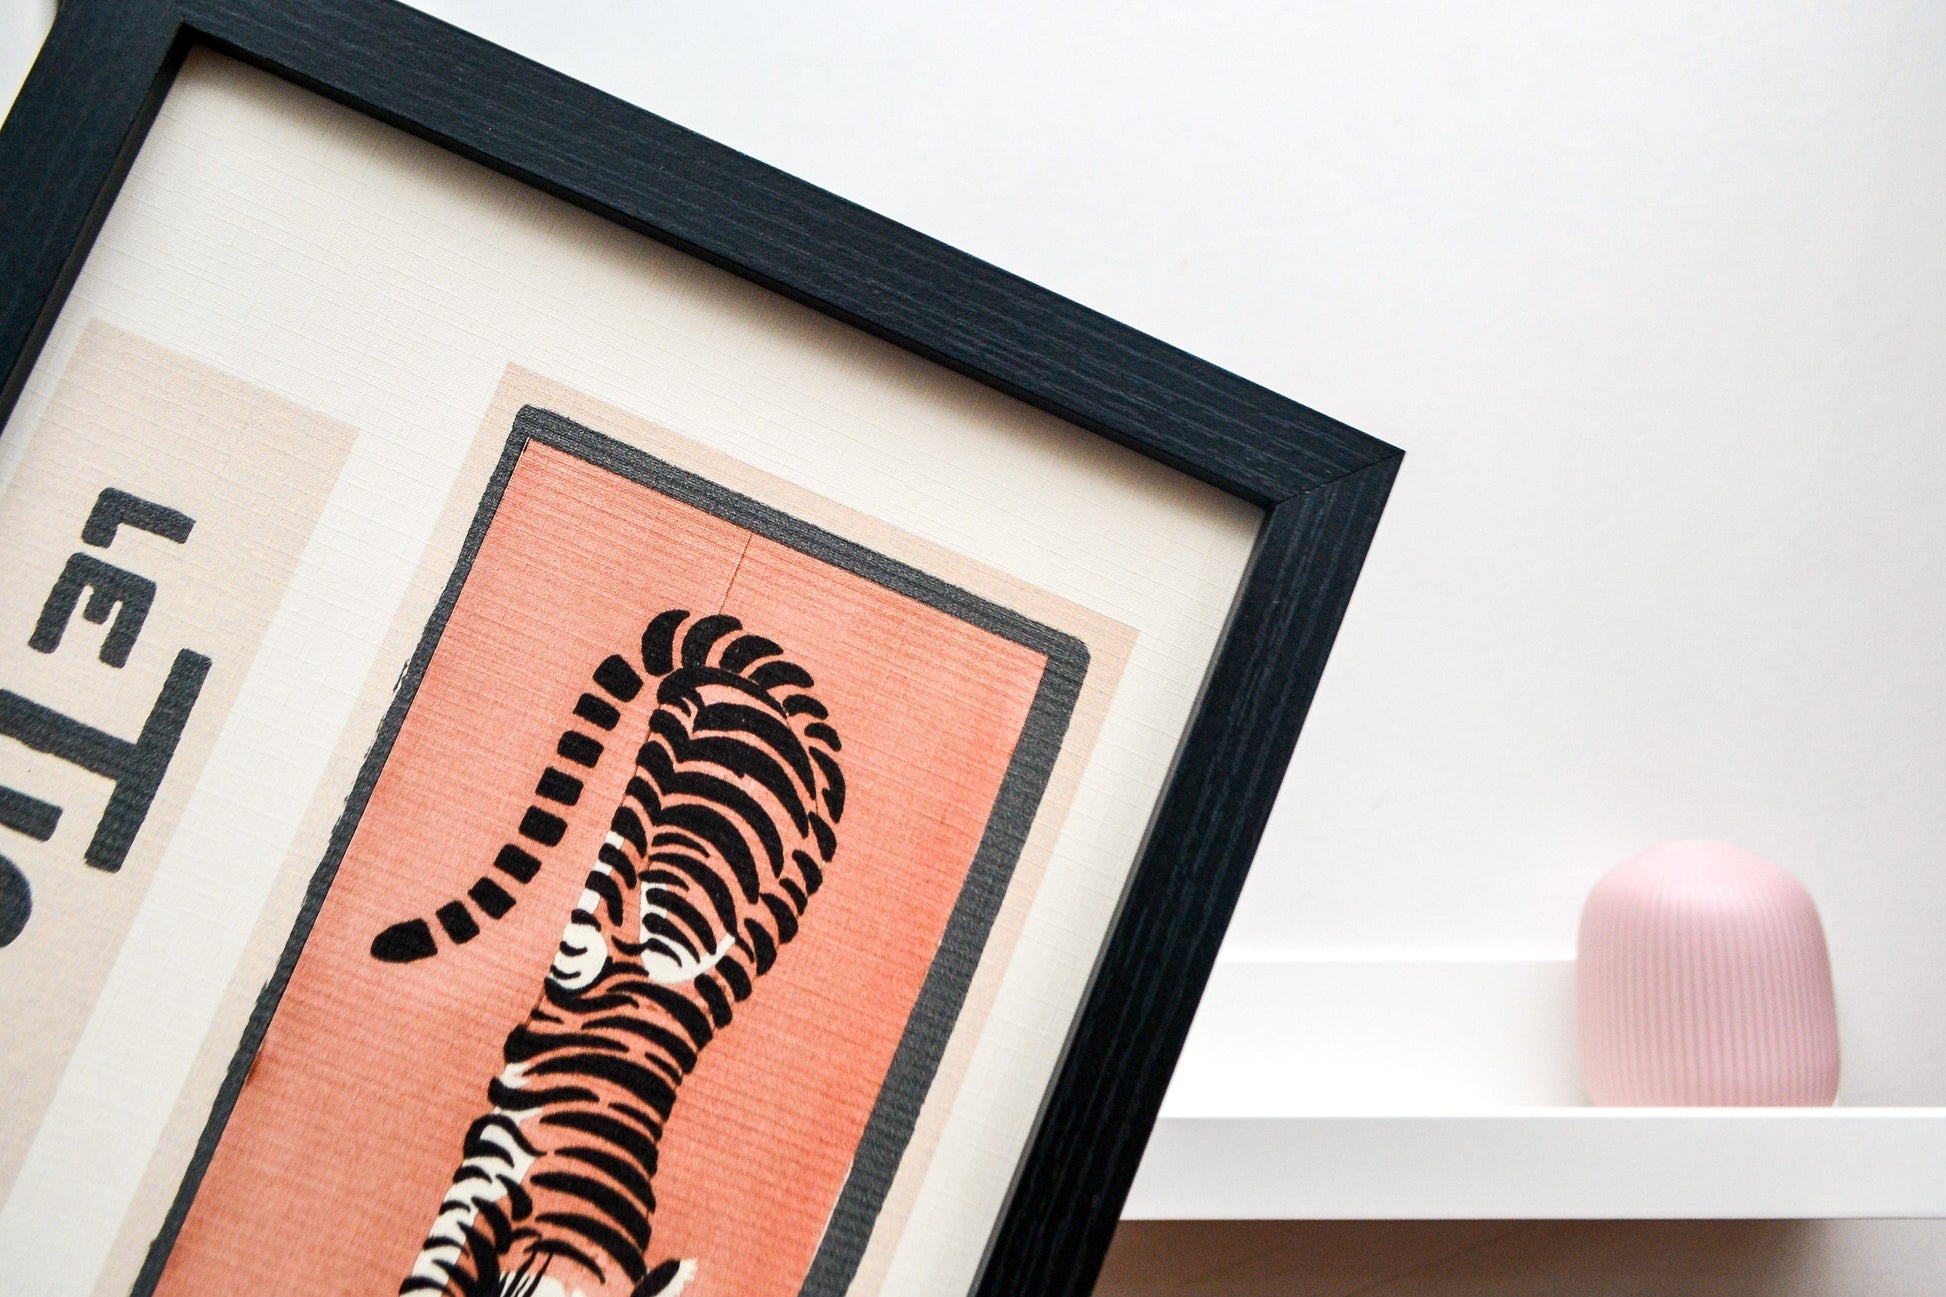 Children's Le Tigre Tiger Illustration, Safari Nursery Print, Vintage French Poster Print french animal prints